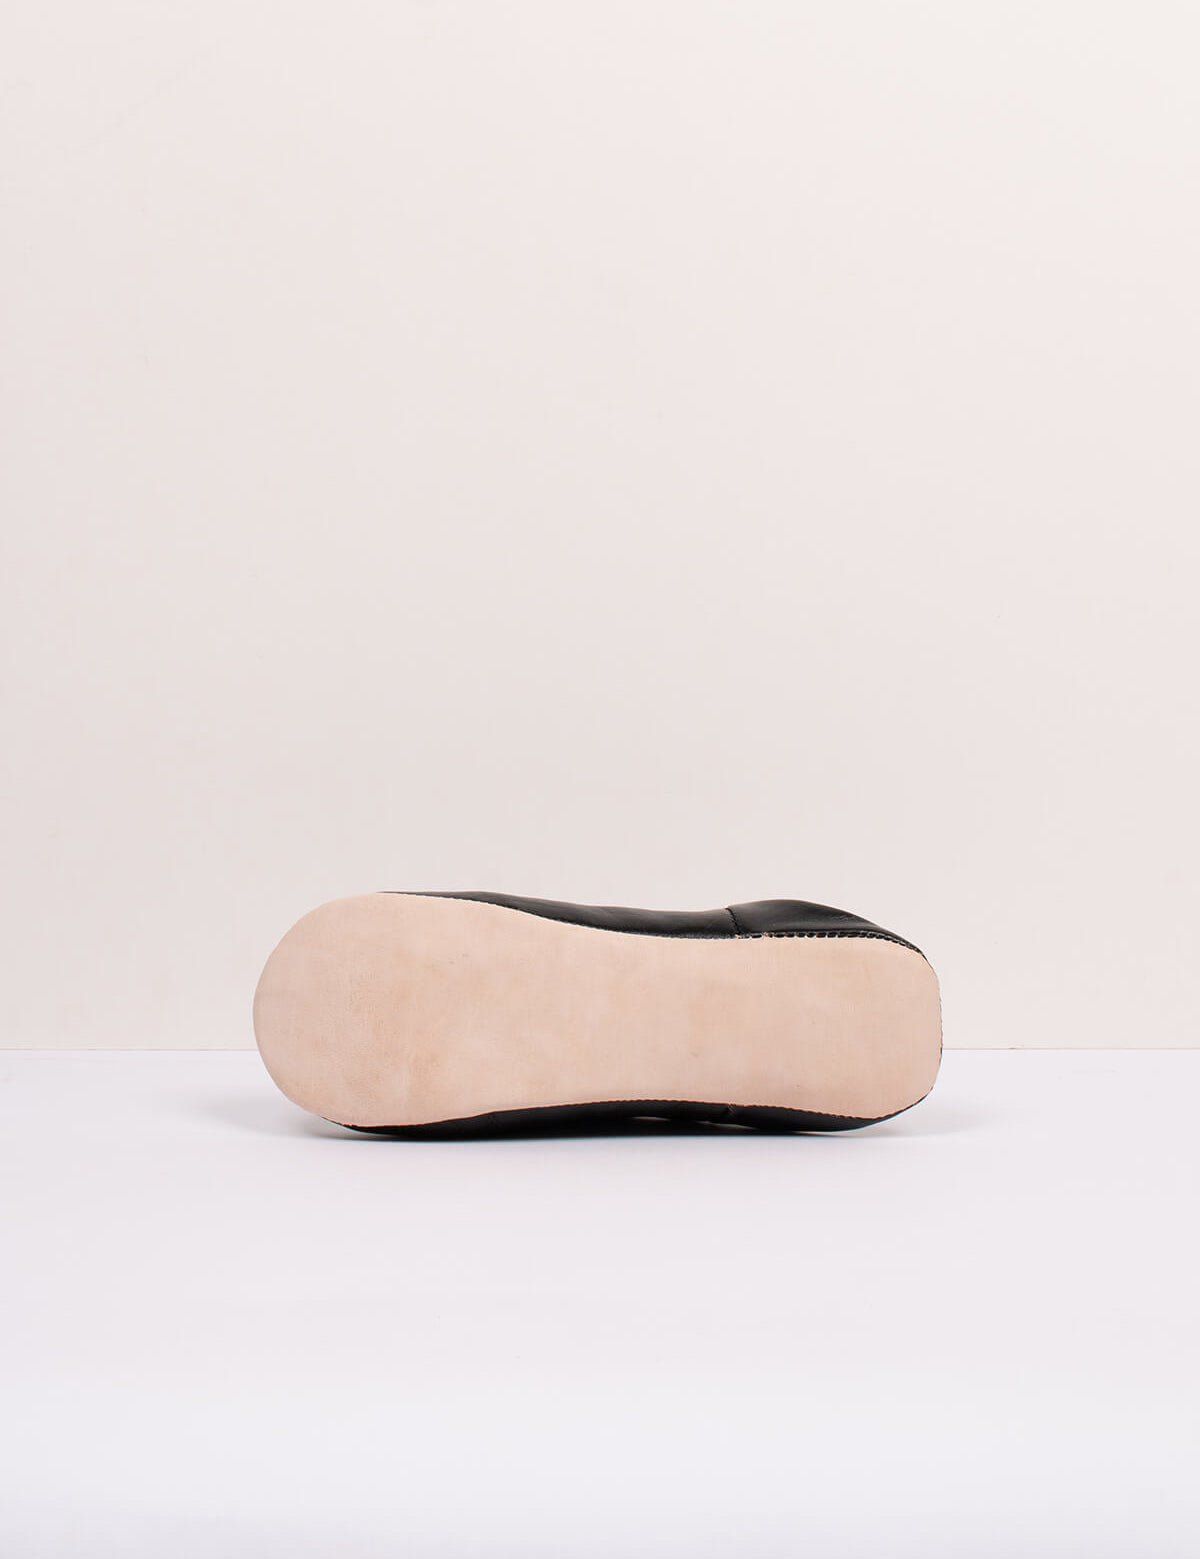 Bohemia-design-moroccan-babouche-slippers-underside-black.jpg